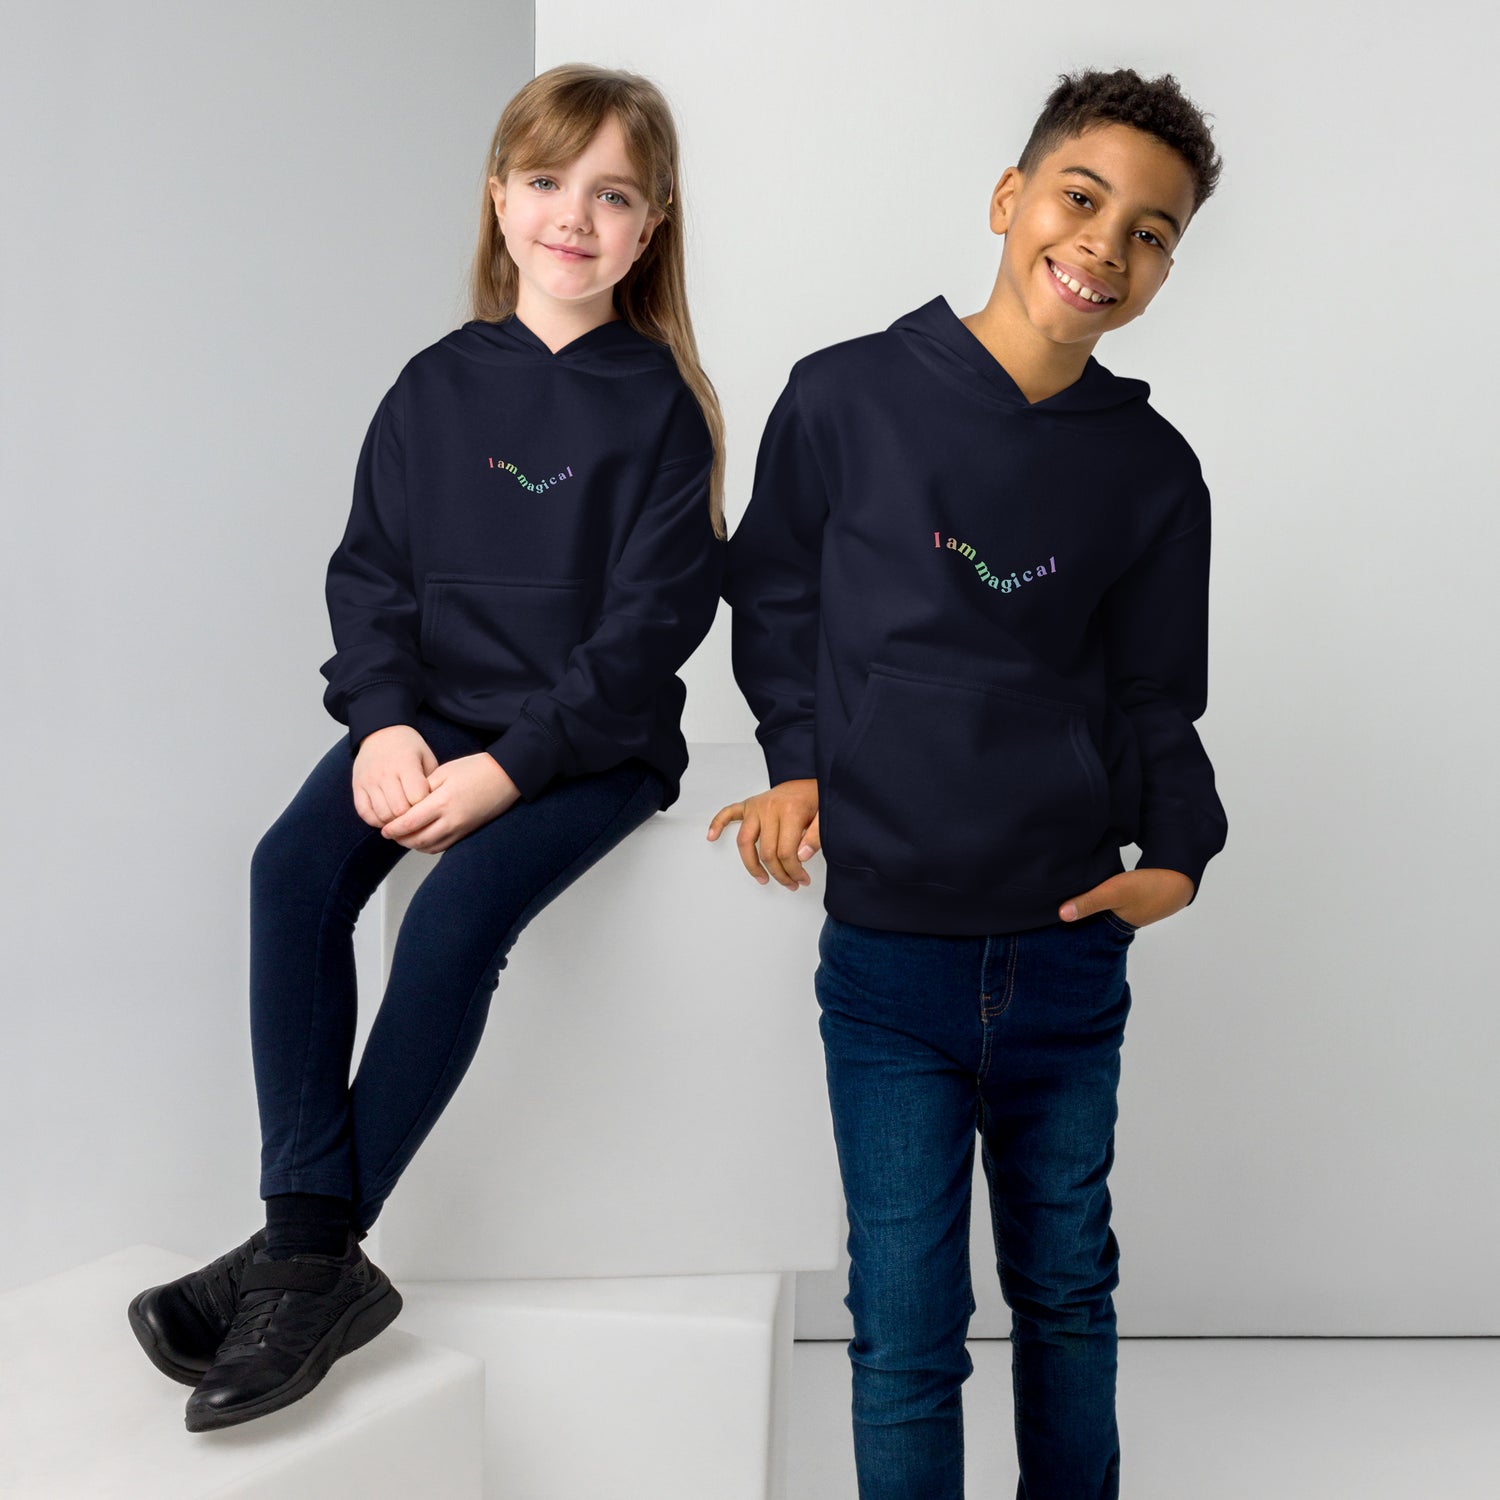 Indigo Kidswear hoodie featuring "Iam magical" design .